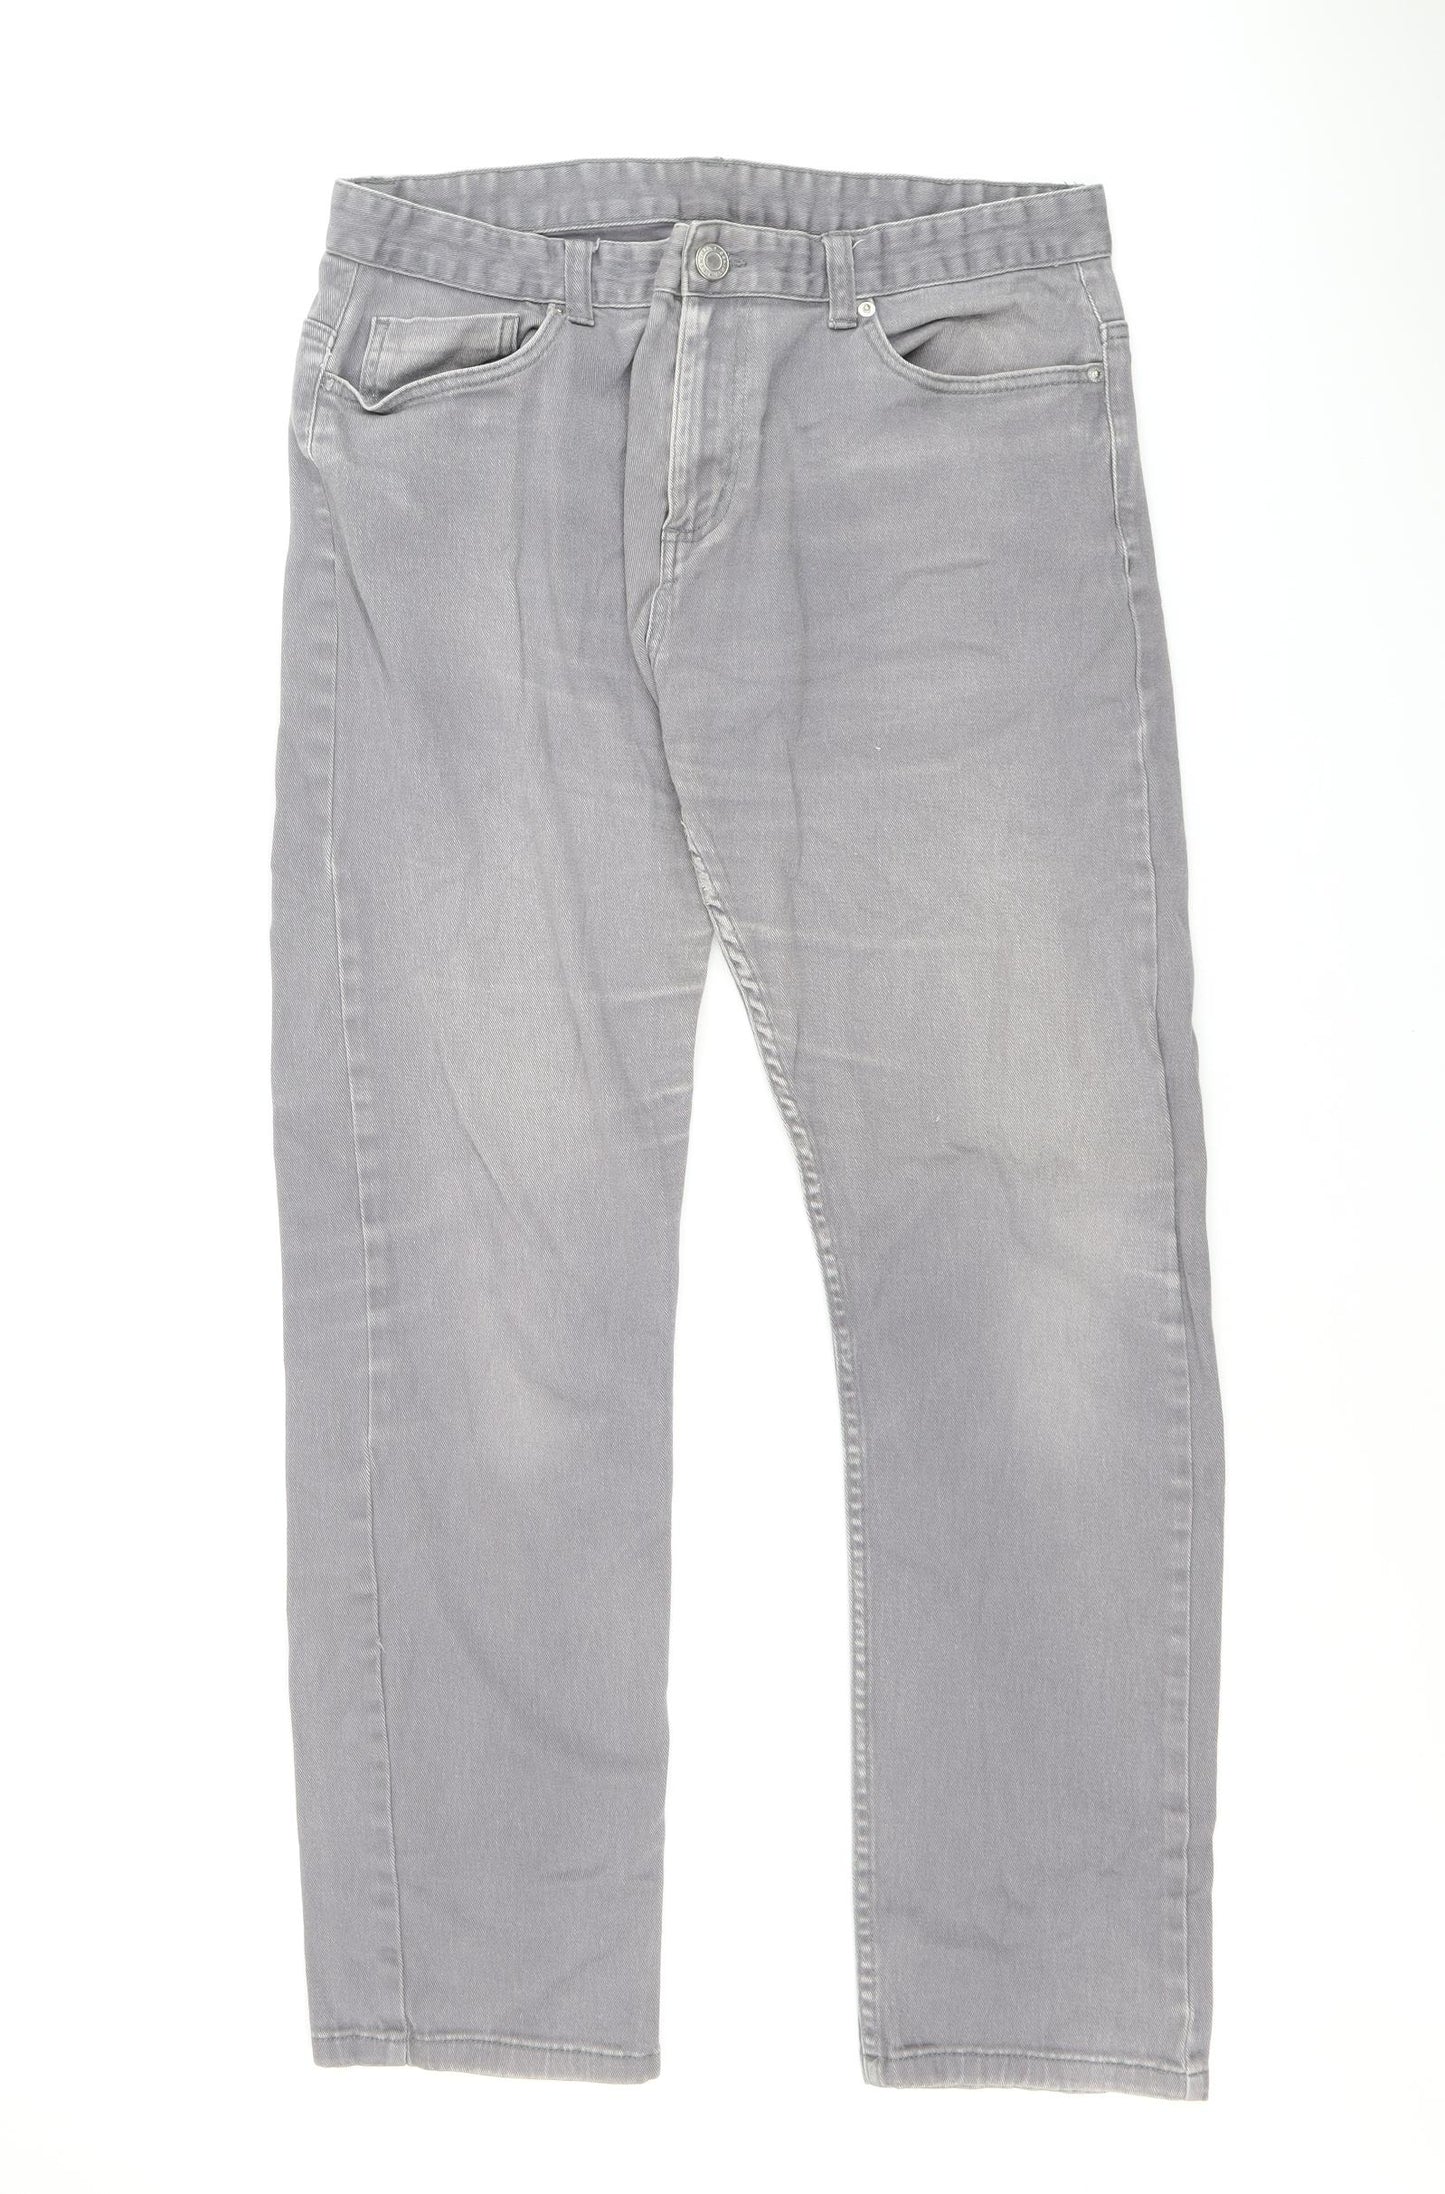 Denim & Co. Mens Grey Cotton Straight Jeans Size 34 in L32 in Regular Zip